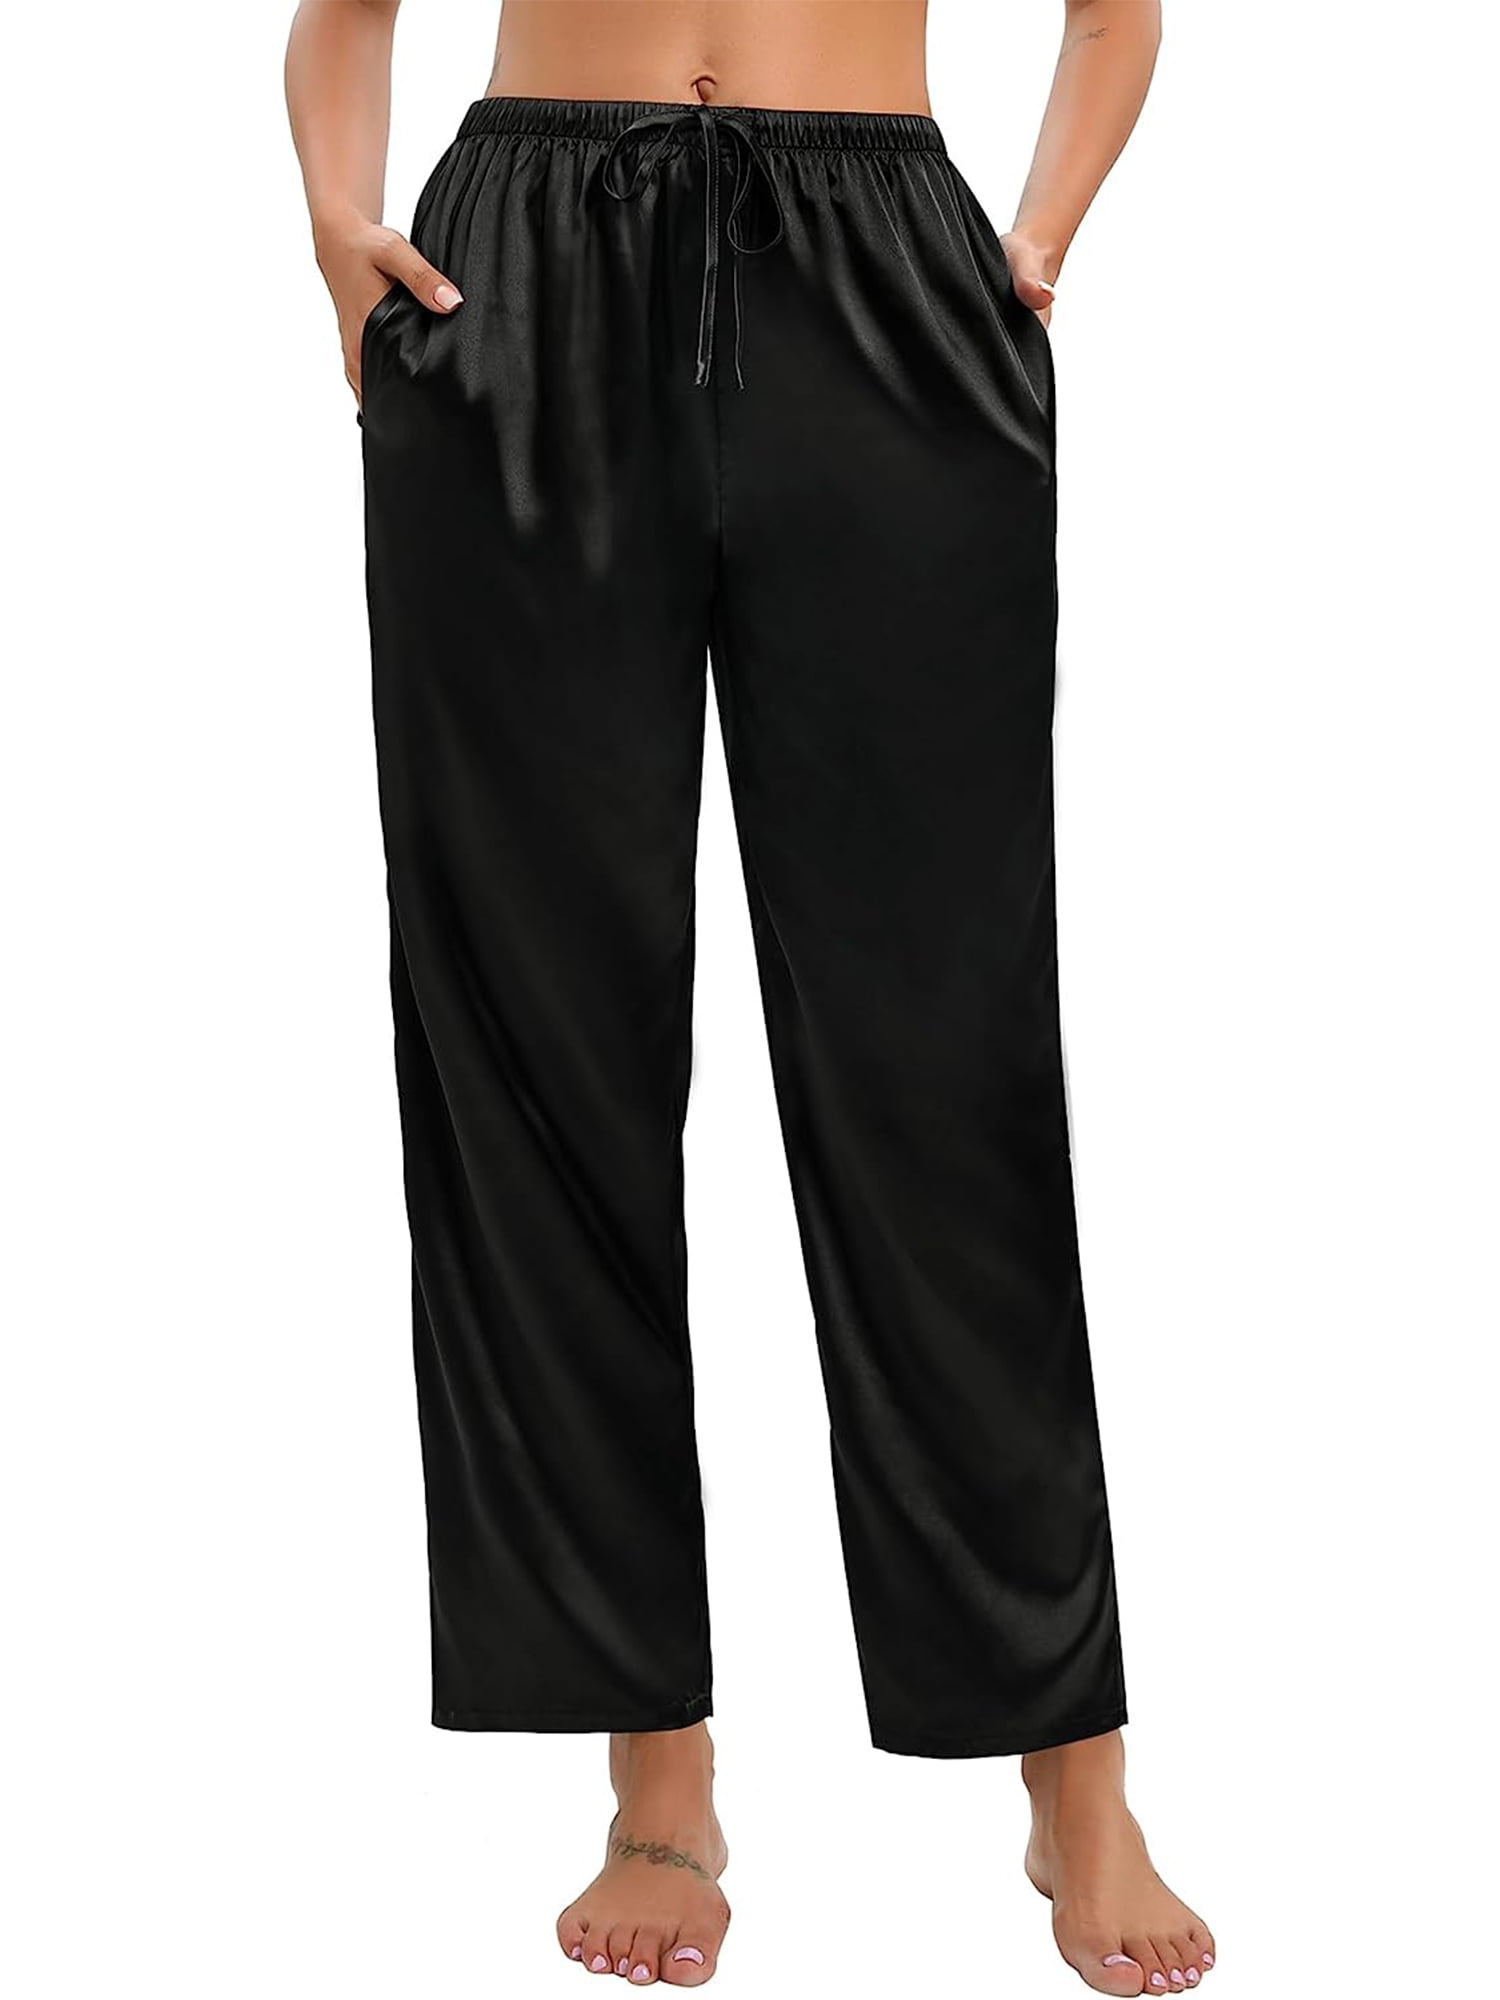 Women's Silk Satin Pajama Pants Soft Long Lounge Pant Drawstring Trousers  Casual Sleepwear Pj Bottoms with Pockets